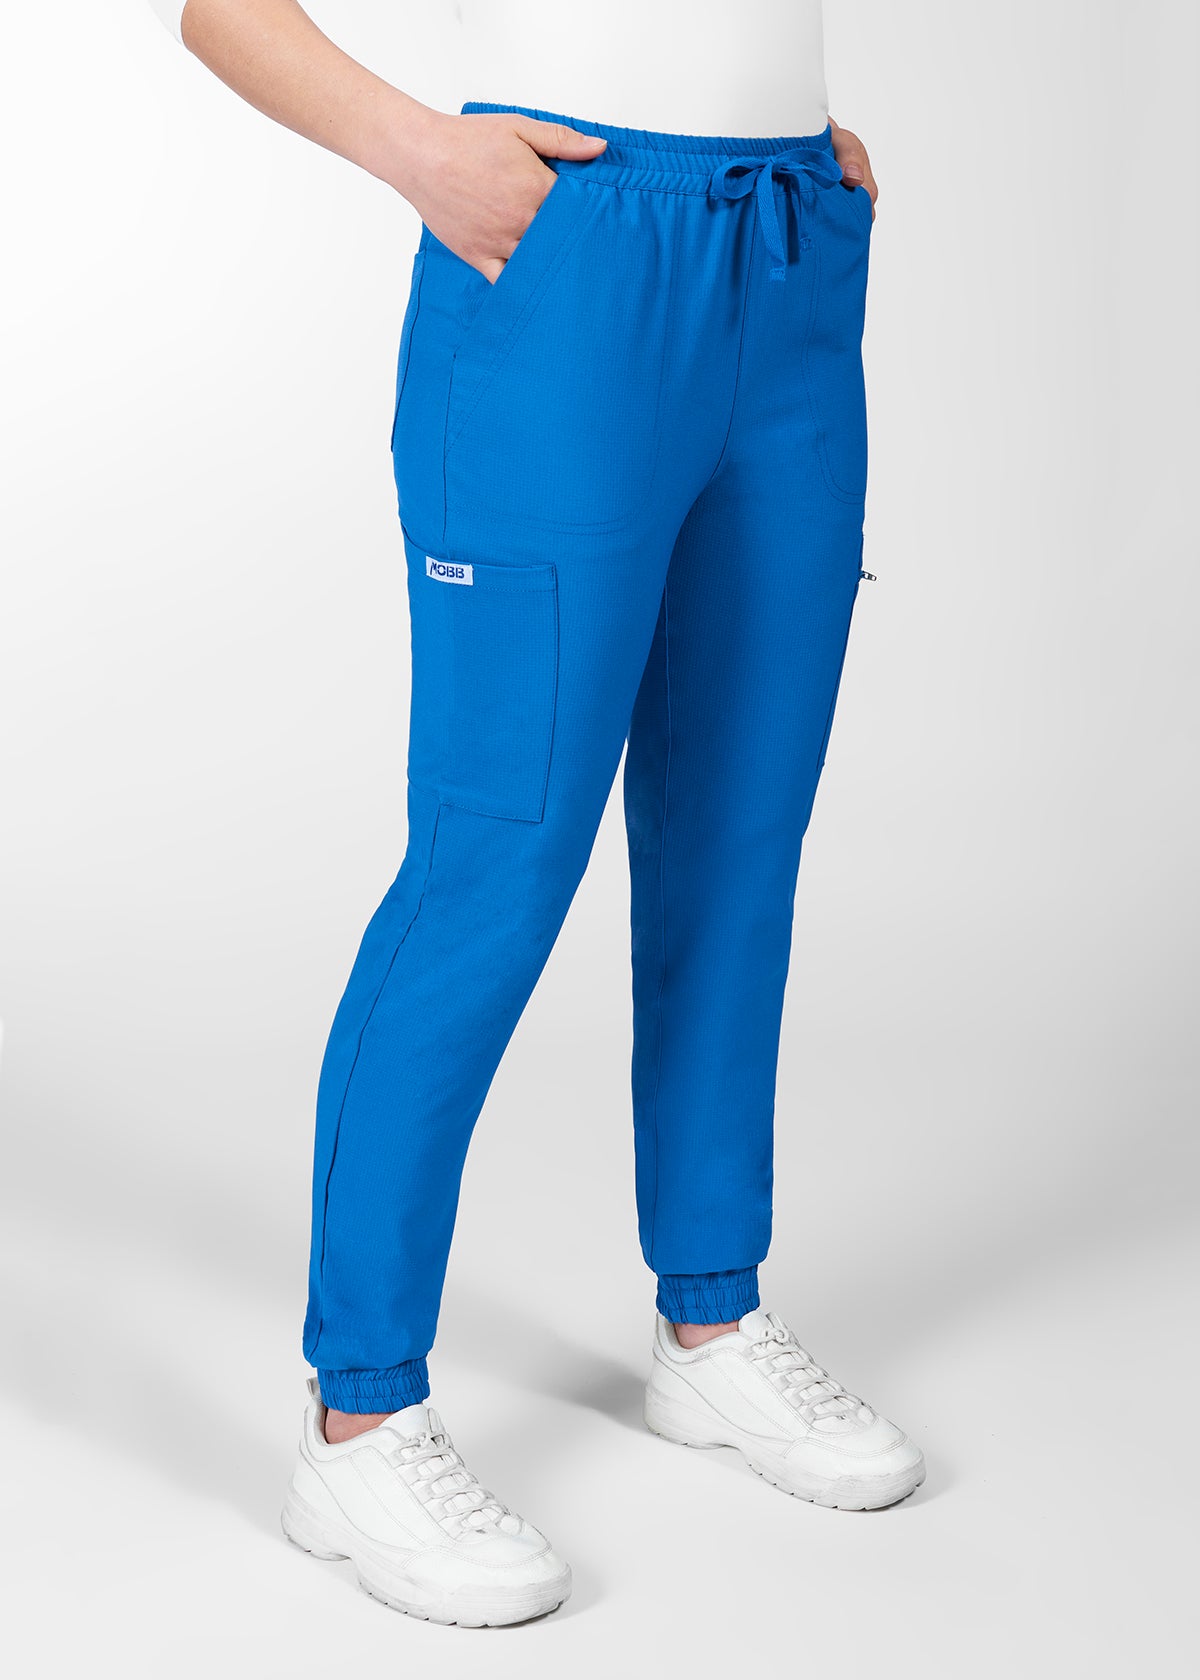 Pantalon de travail type jogging Mentality MOBB #P8011 Atlantic Blue